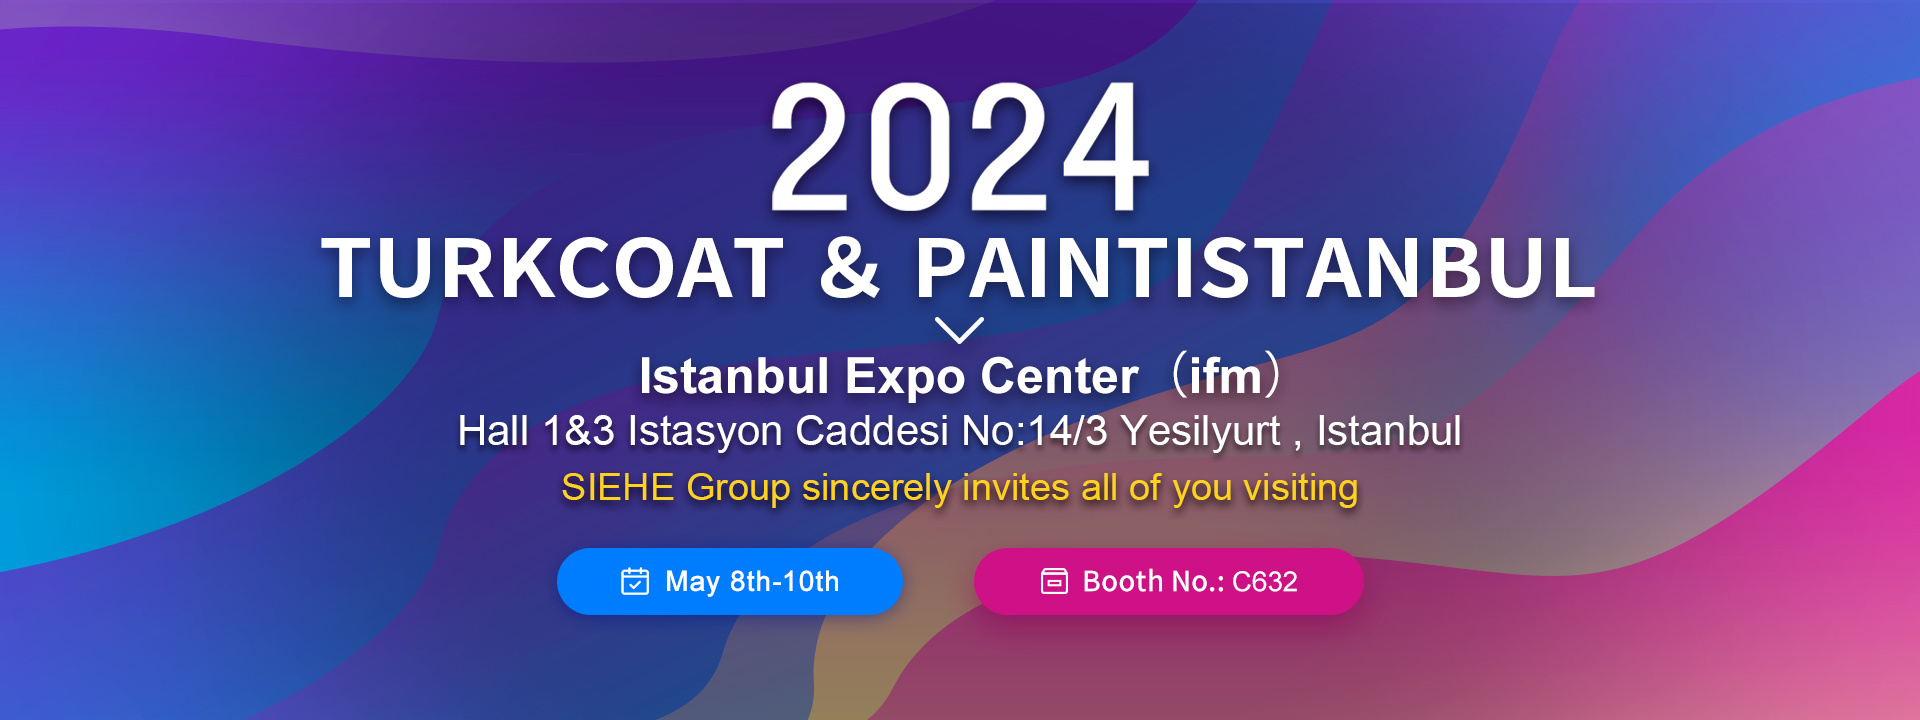 2024 Turkey Exhibitions